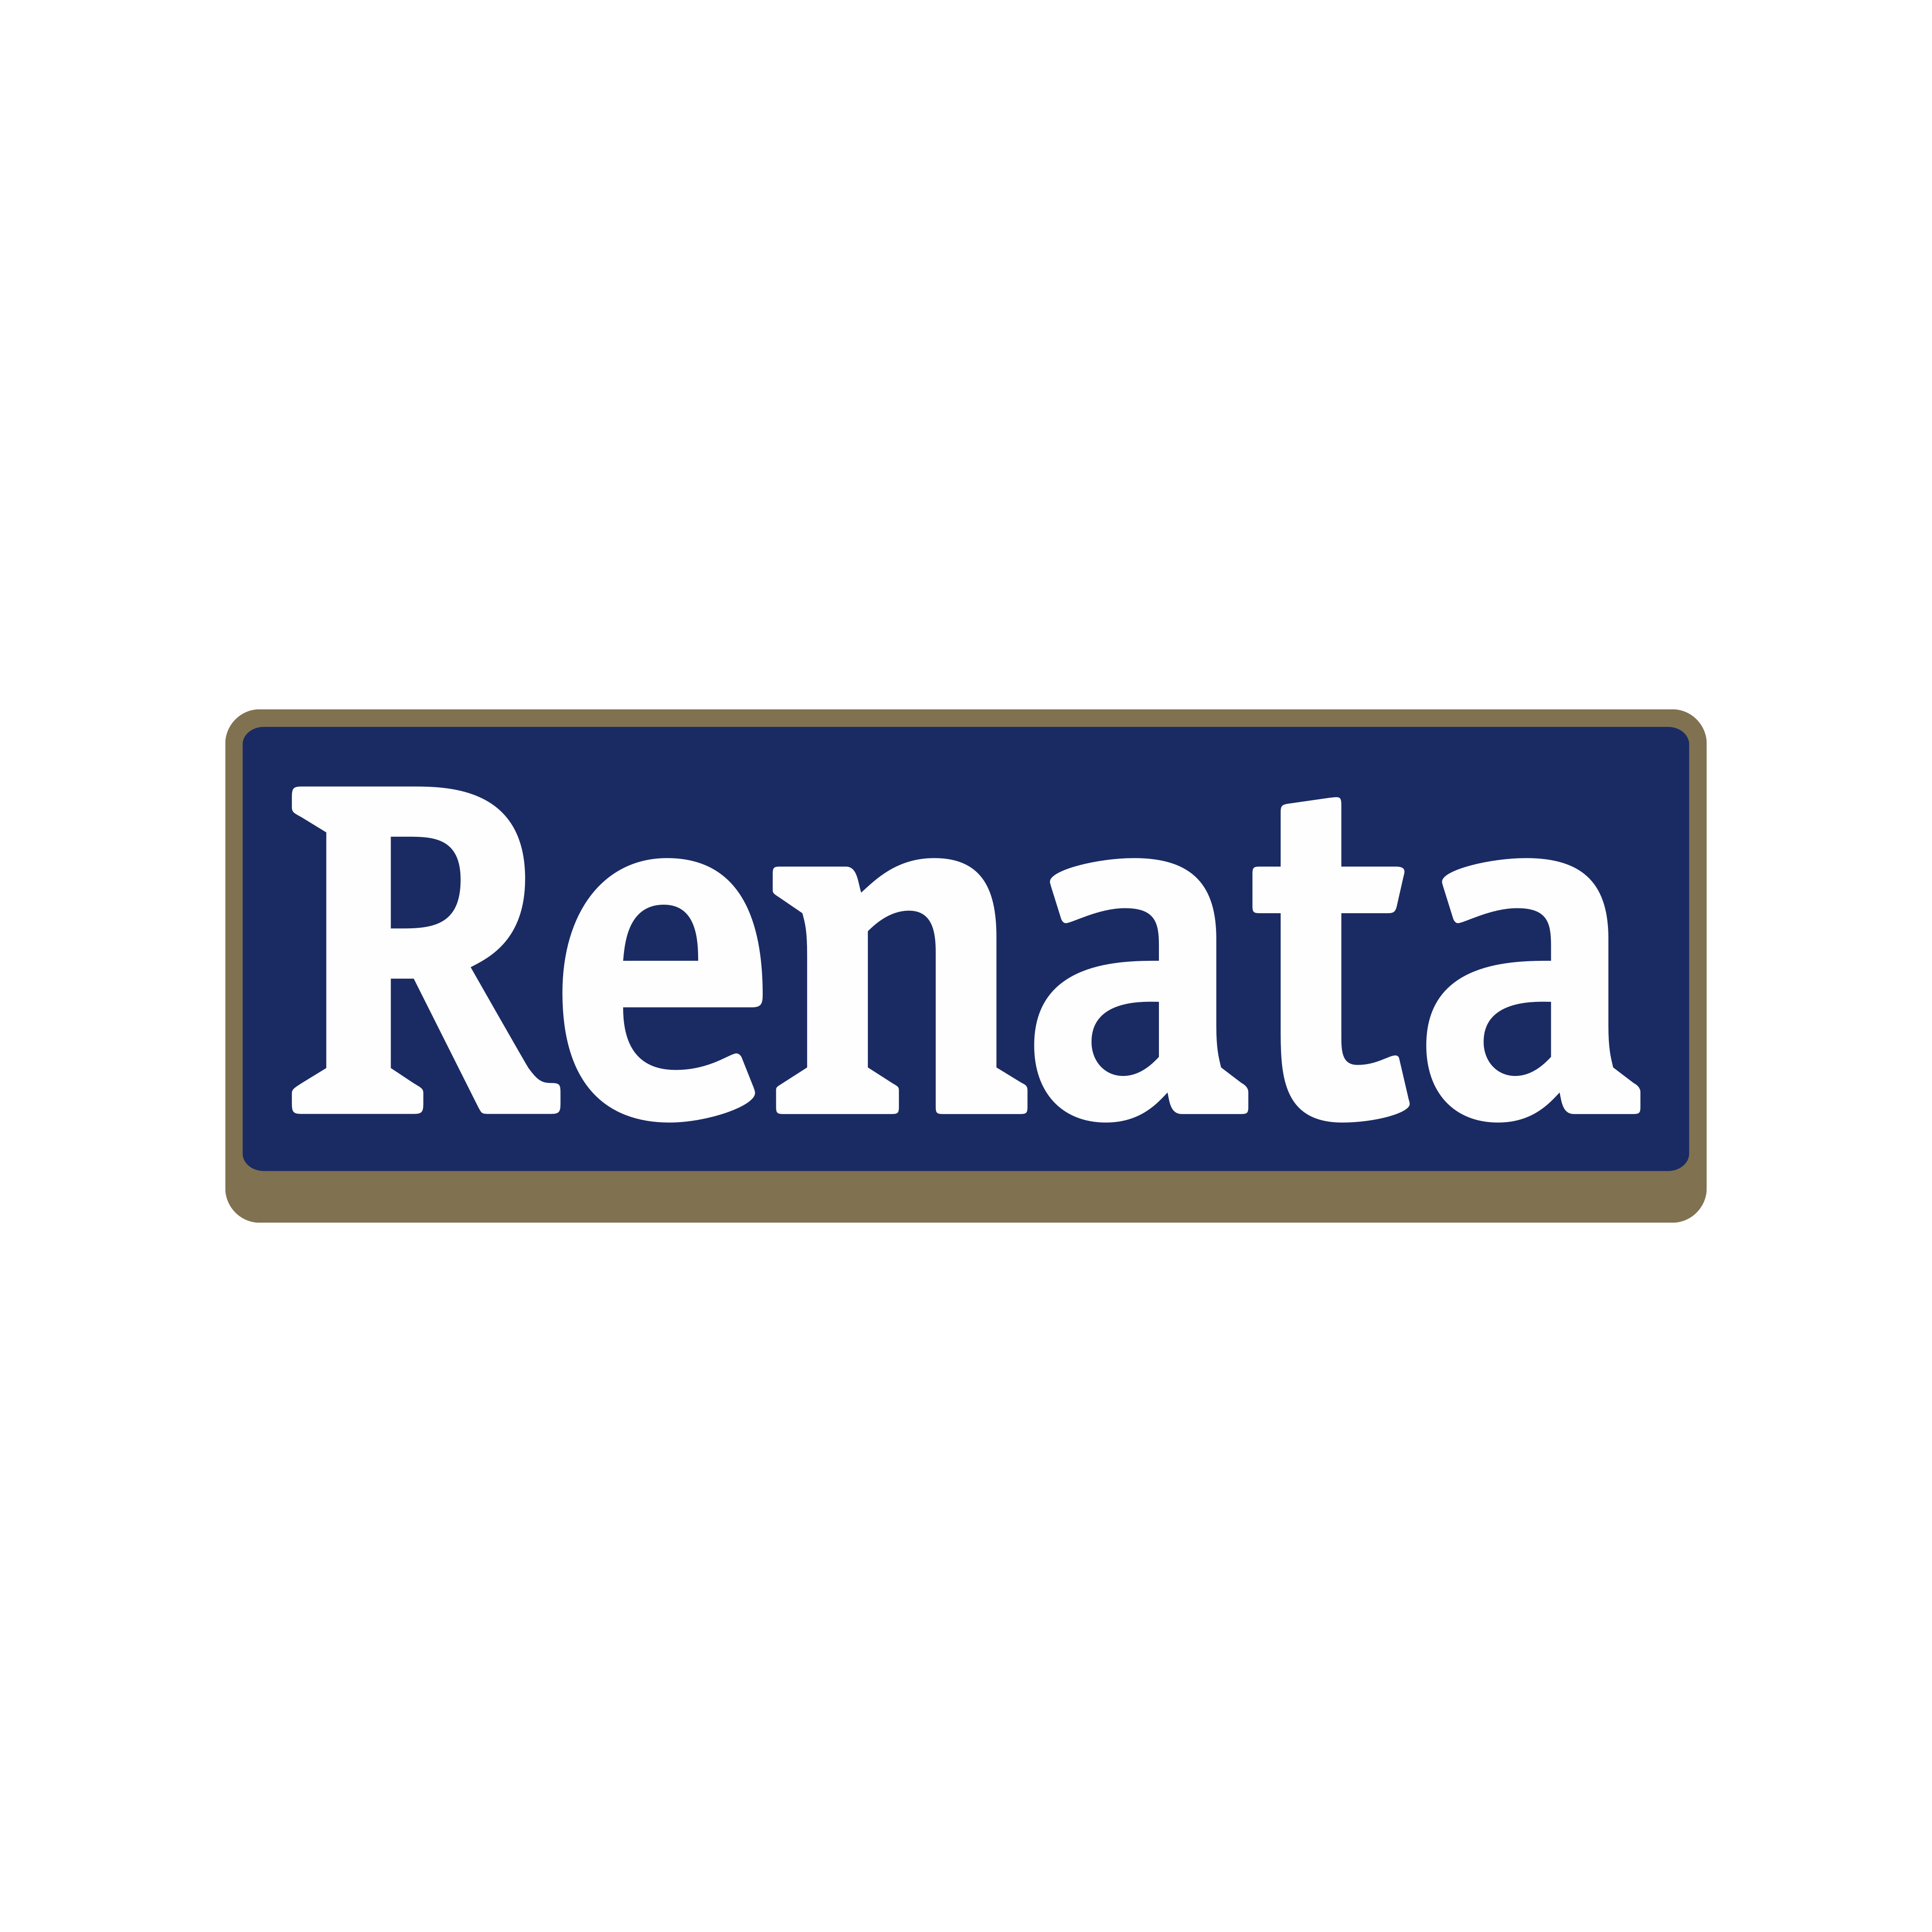 Renata Logo PNG.